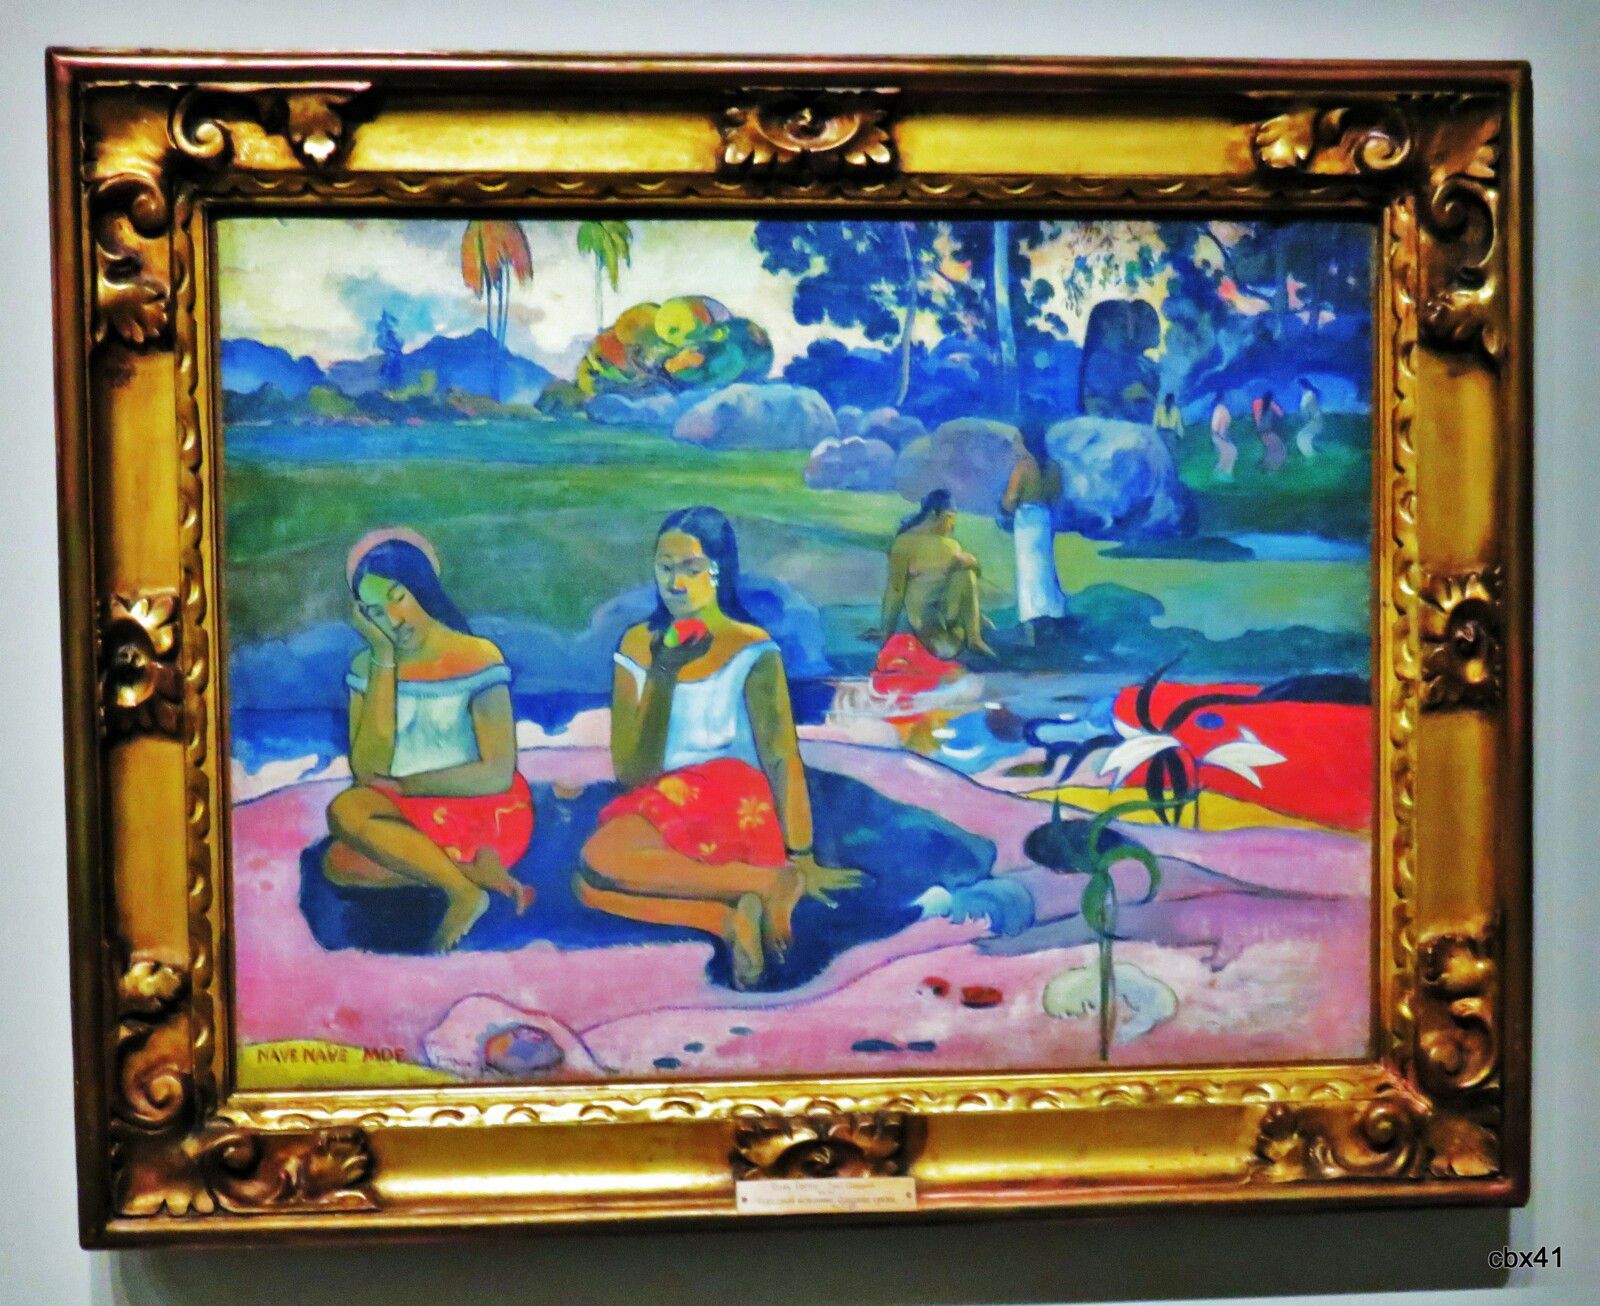 Paul Gauguin, Nave Nave Moe (Collection Morozov)